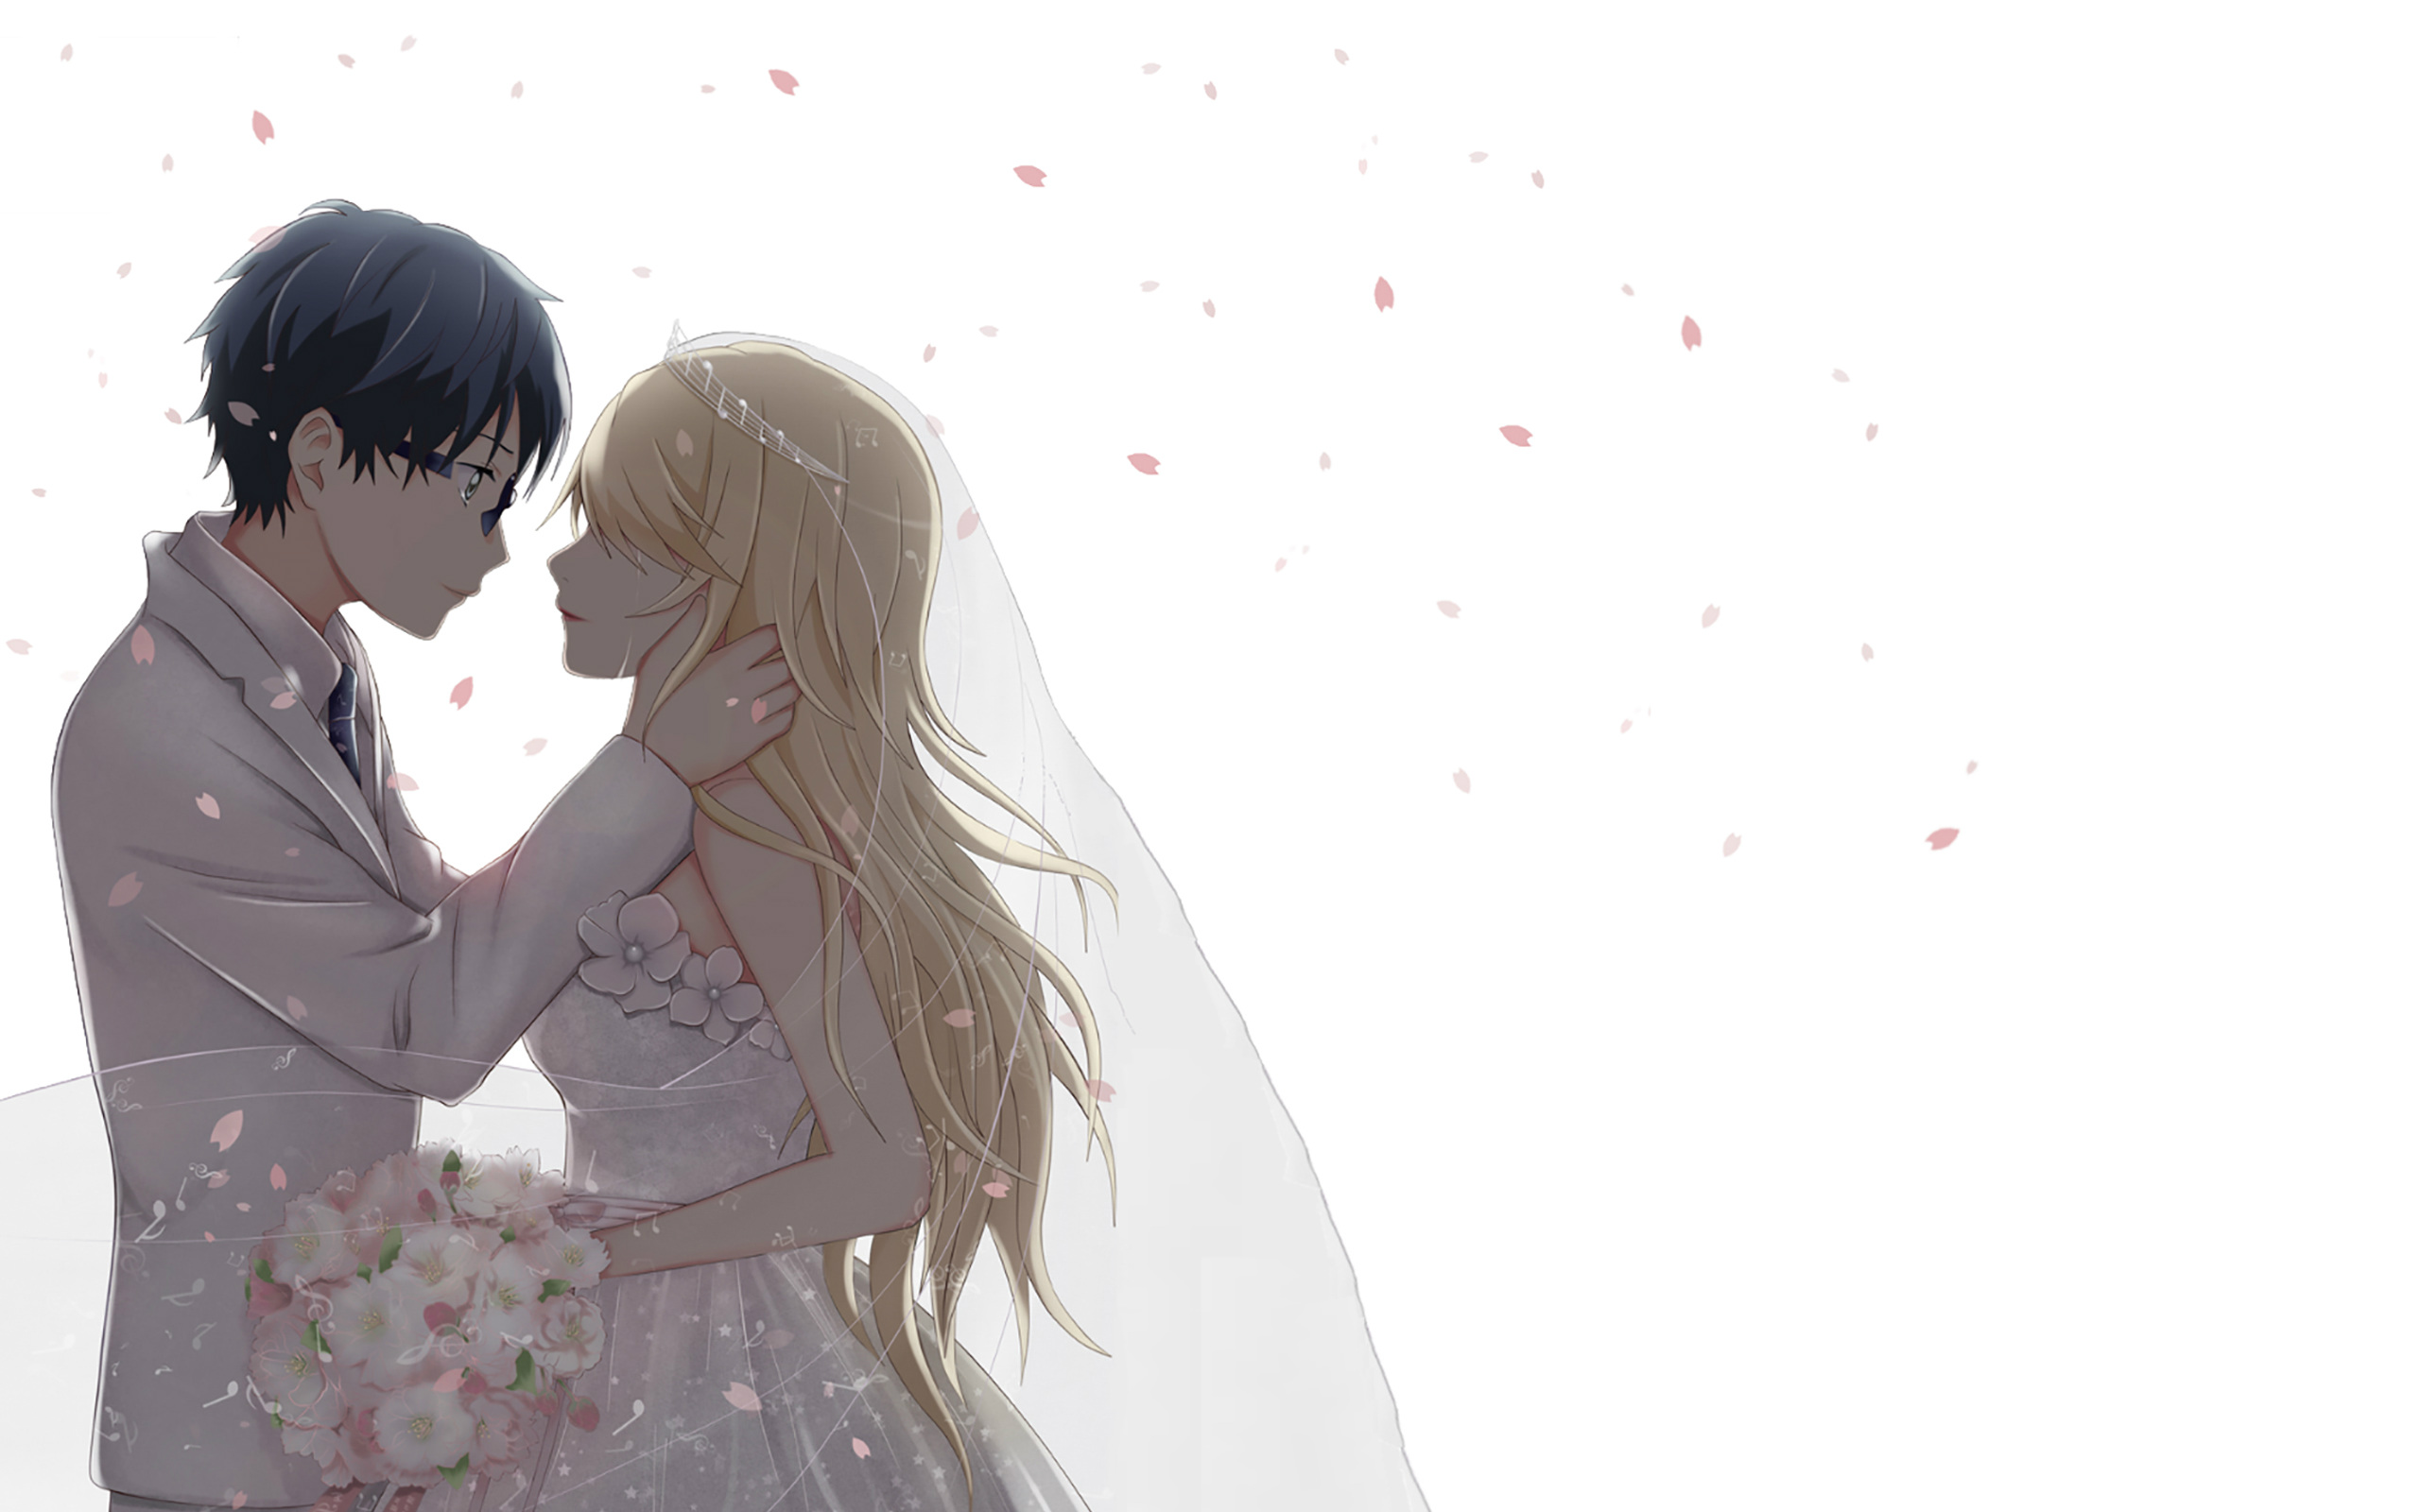 Beautiful Anime Couple Wallpaper HD Image One